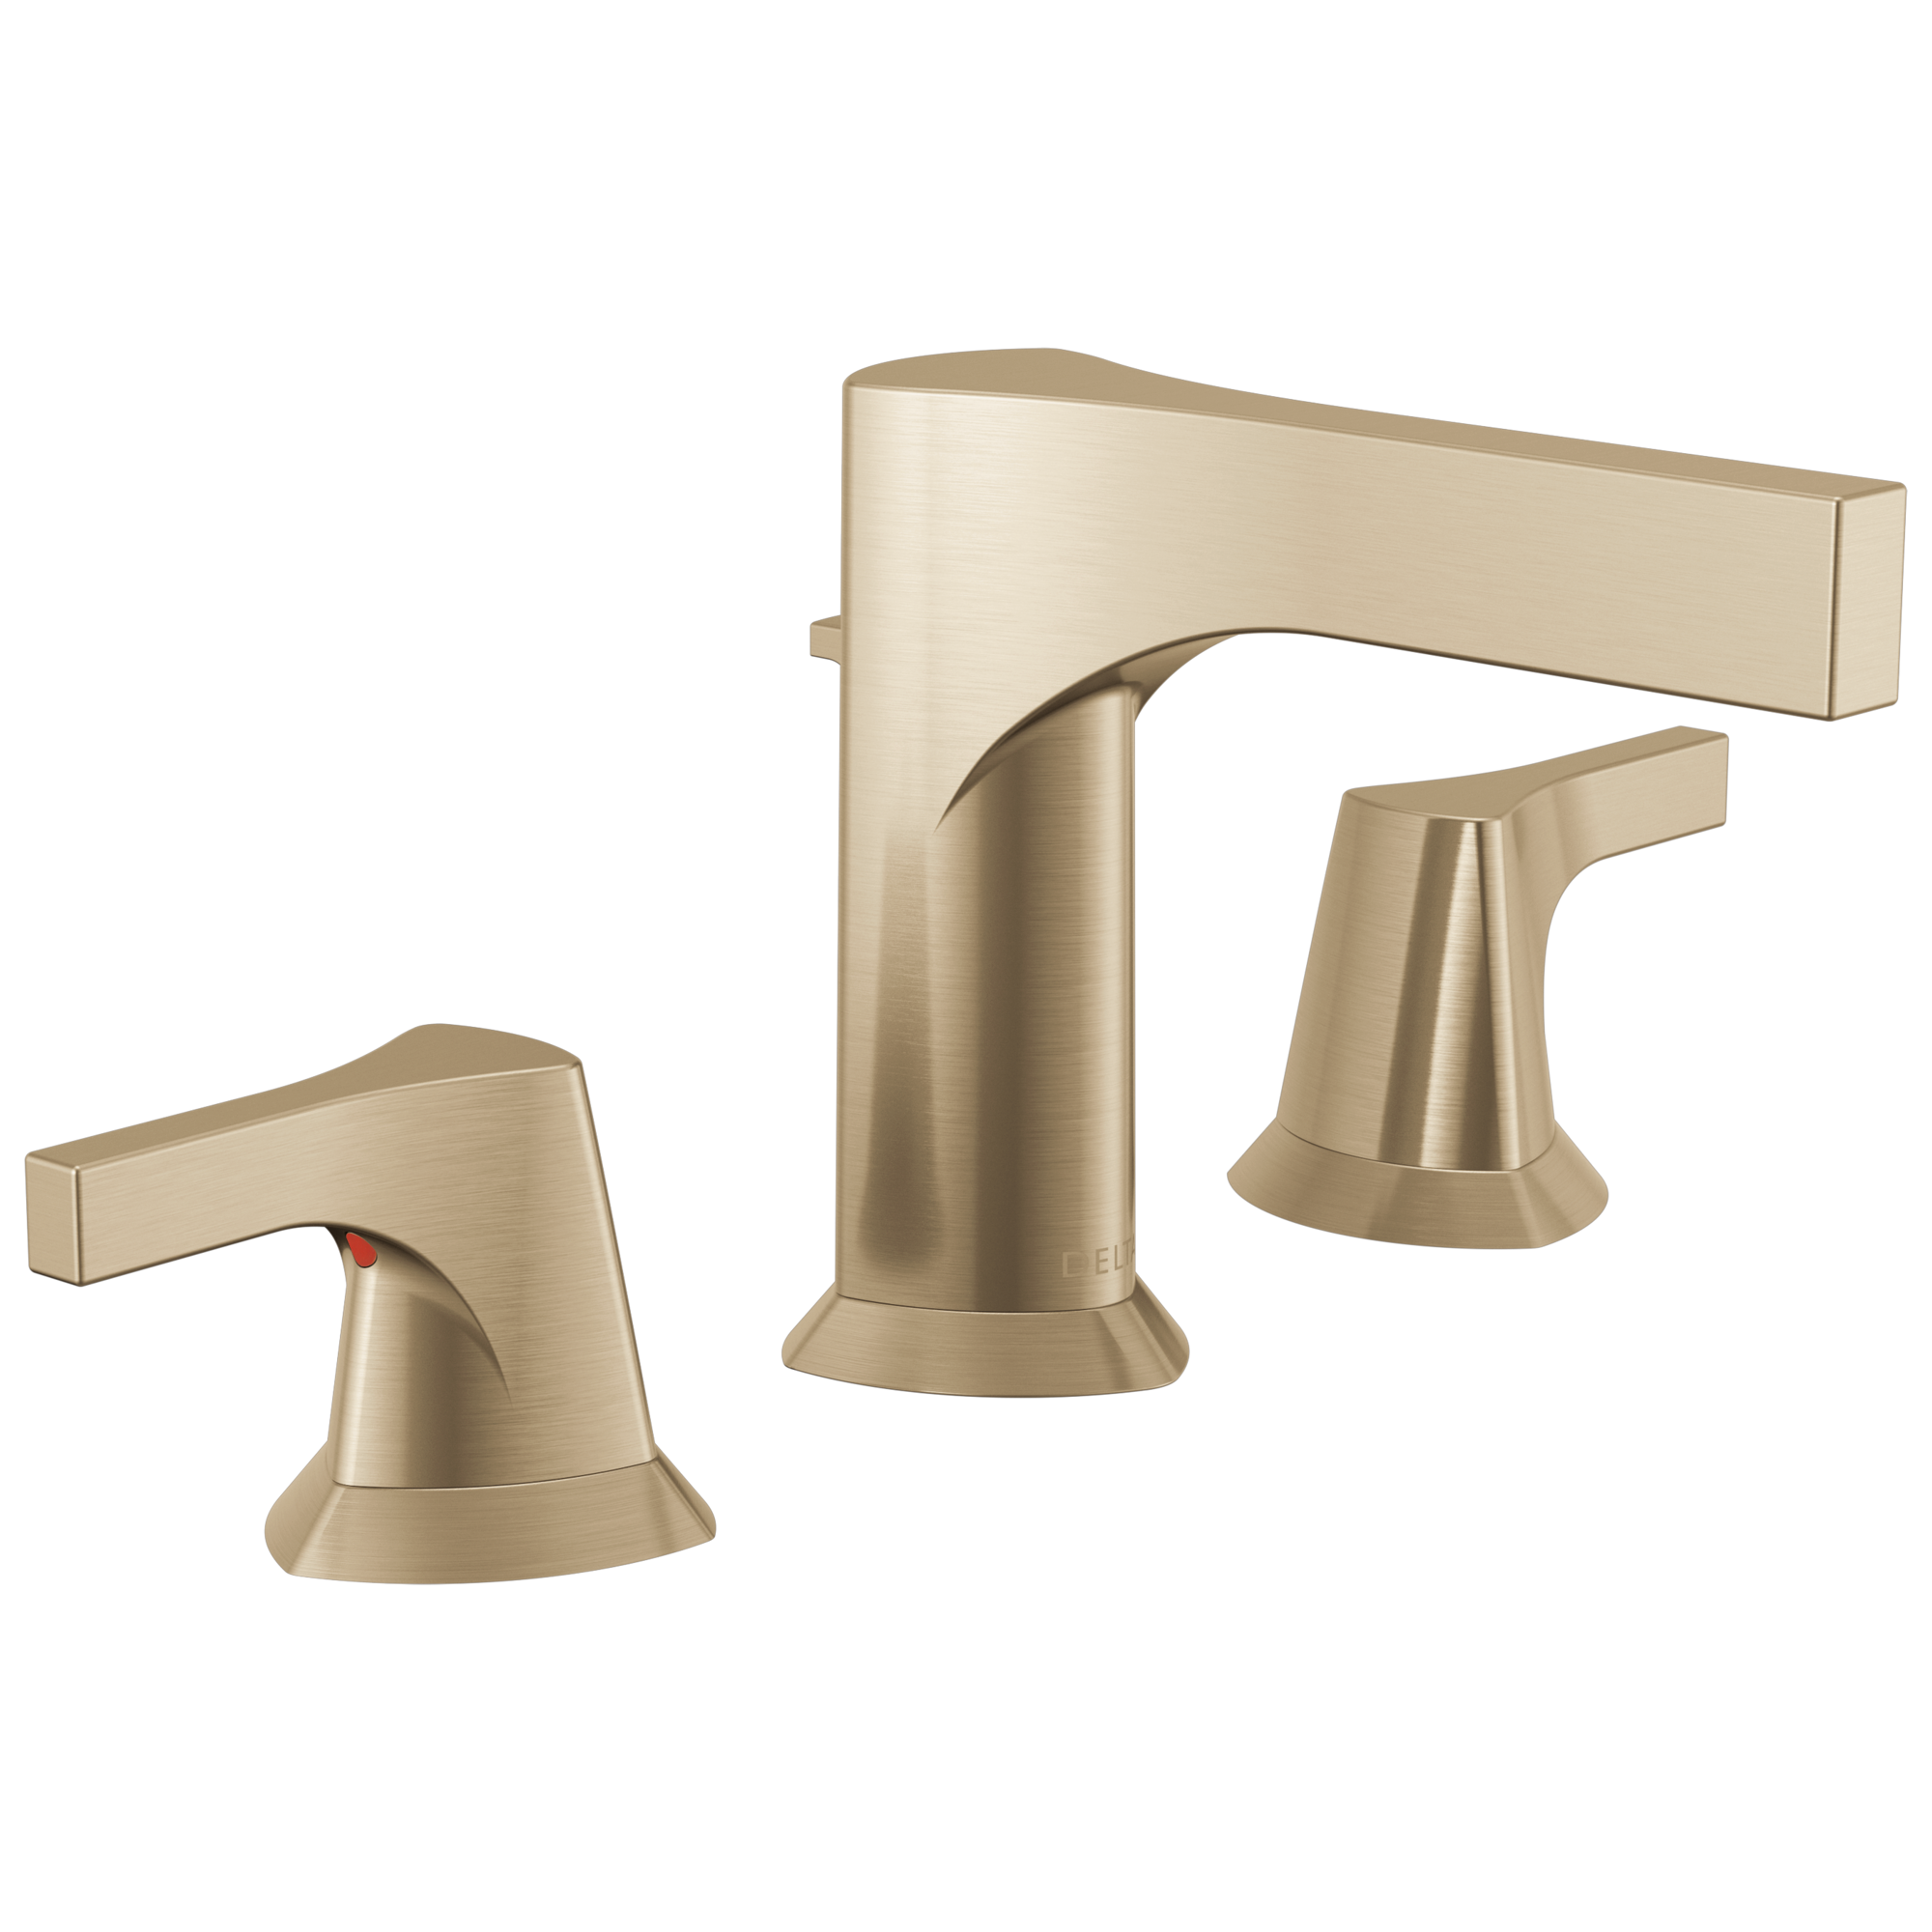 Delta Zura Two Handle Widespread Bathroom Faucet in Champagne Bronze